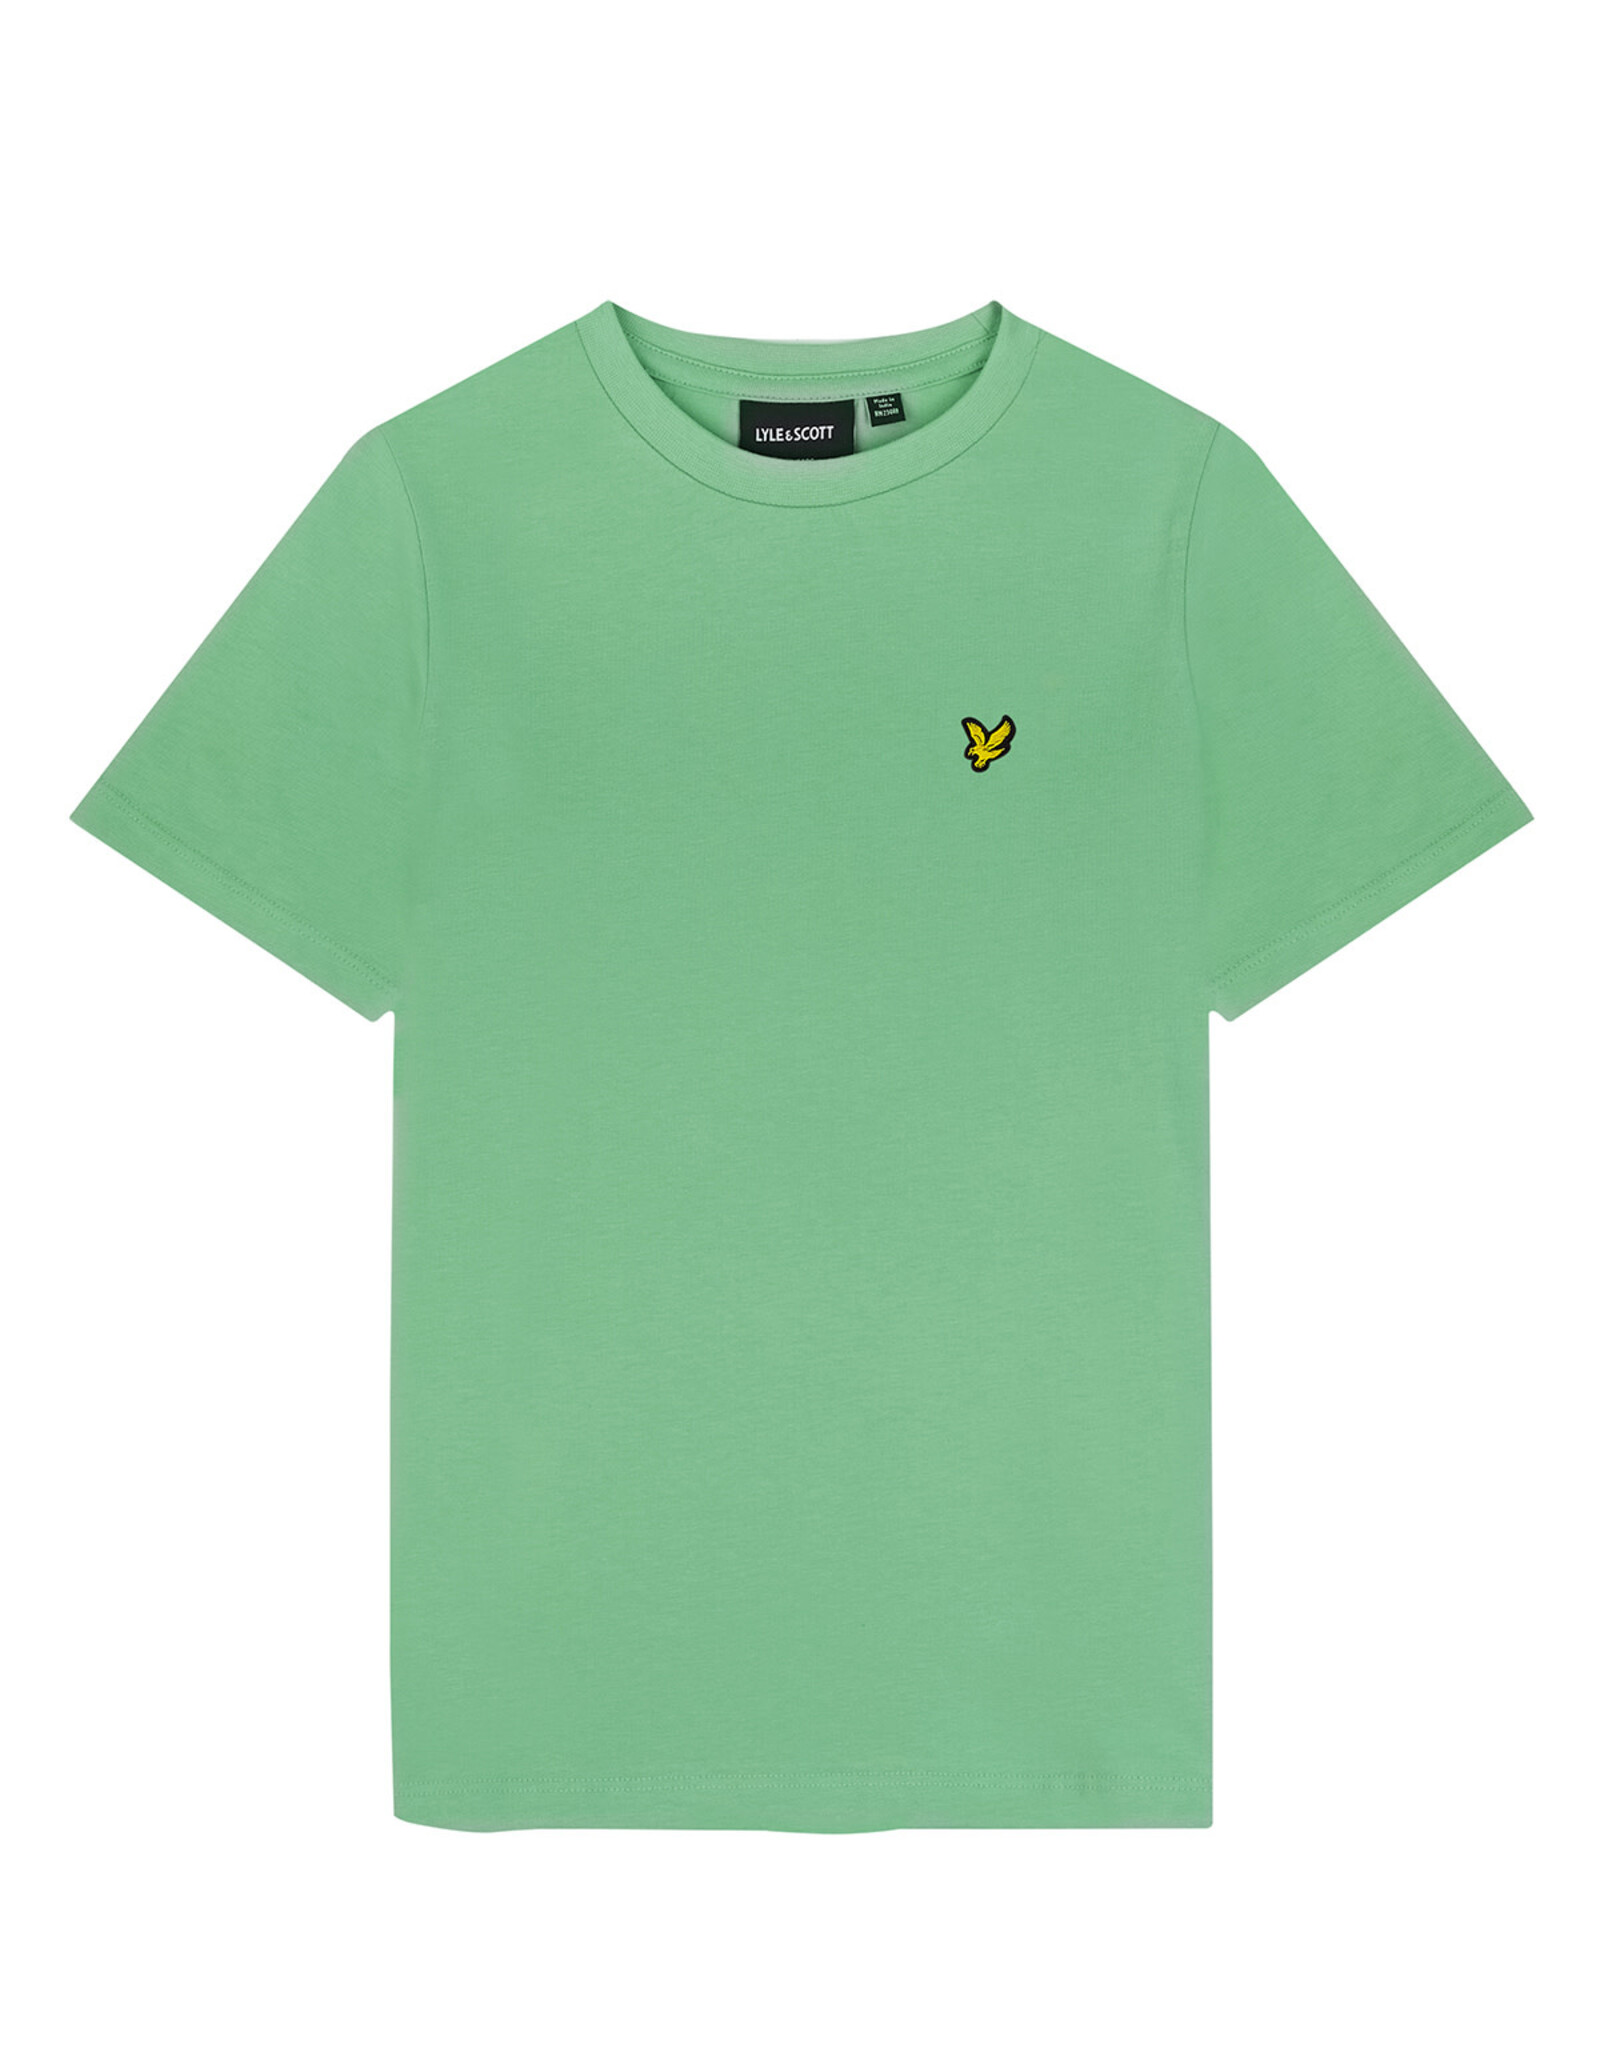 Lyle & Scott Plain T-shirt X156 Lawn Green